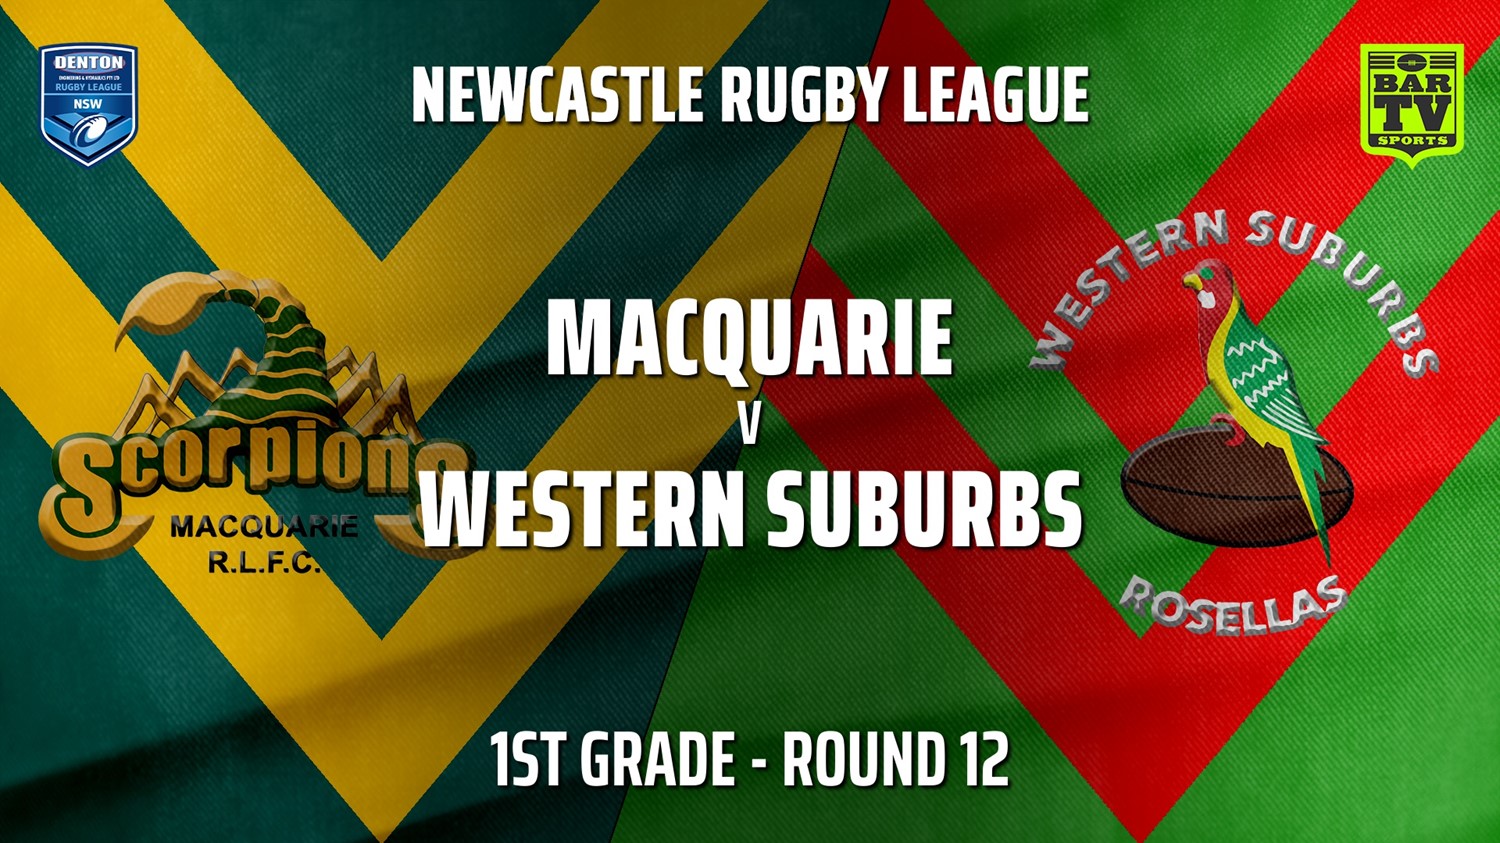 210620-Newcastle Round 12 - 1st Grade - Macquarie Scorpions v Western Suburbs Rosellas Slate Image